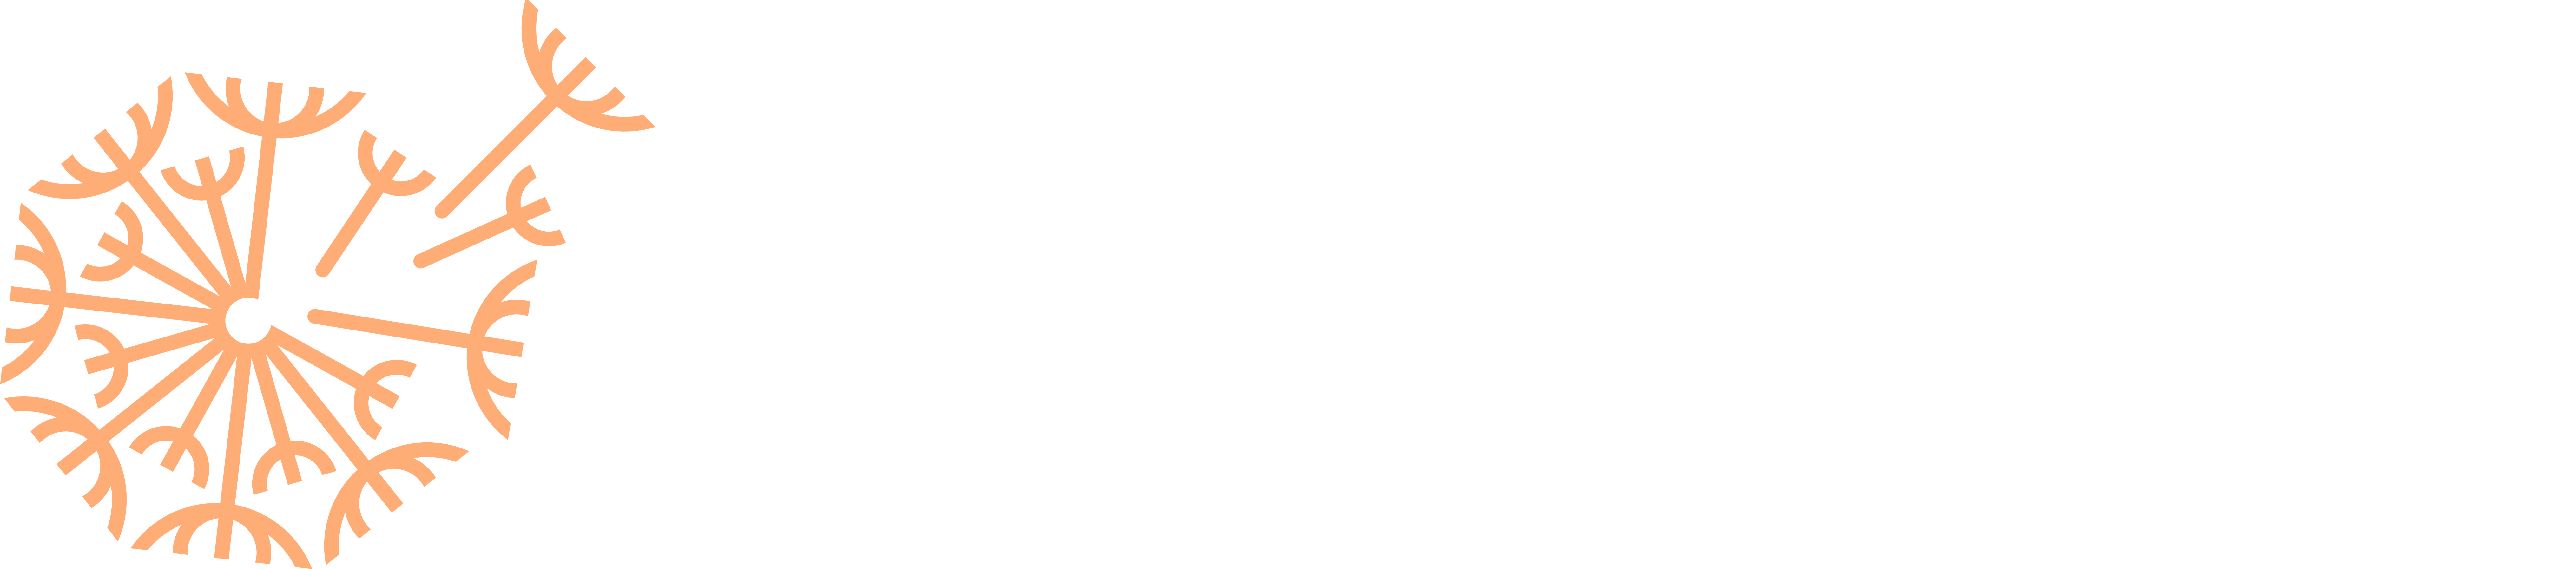 The Pregnancy Care Center Logo